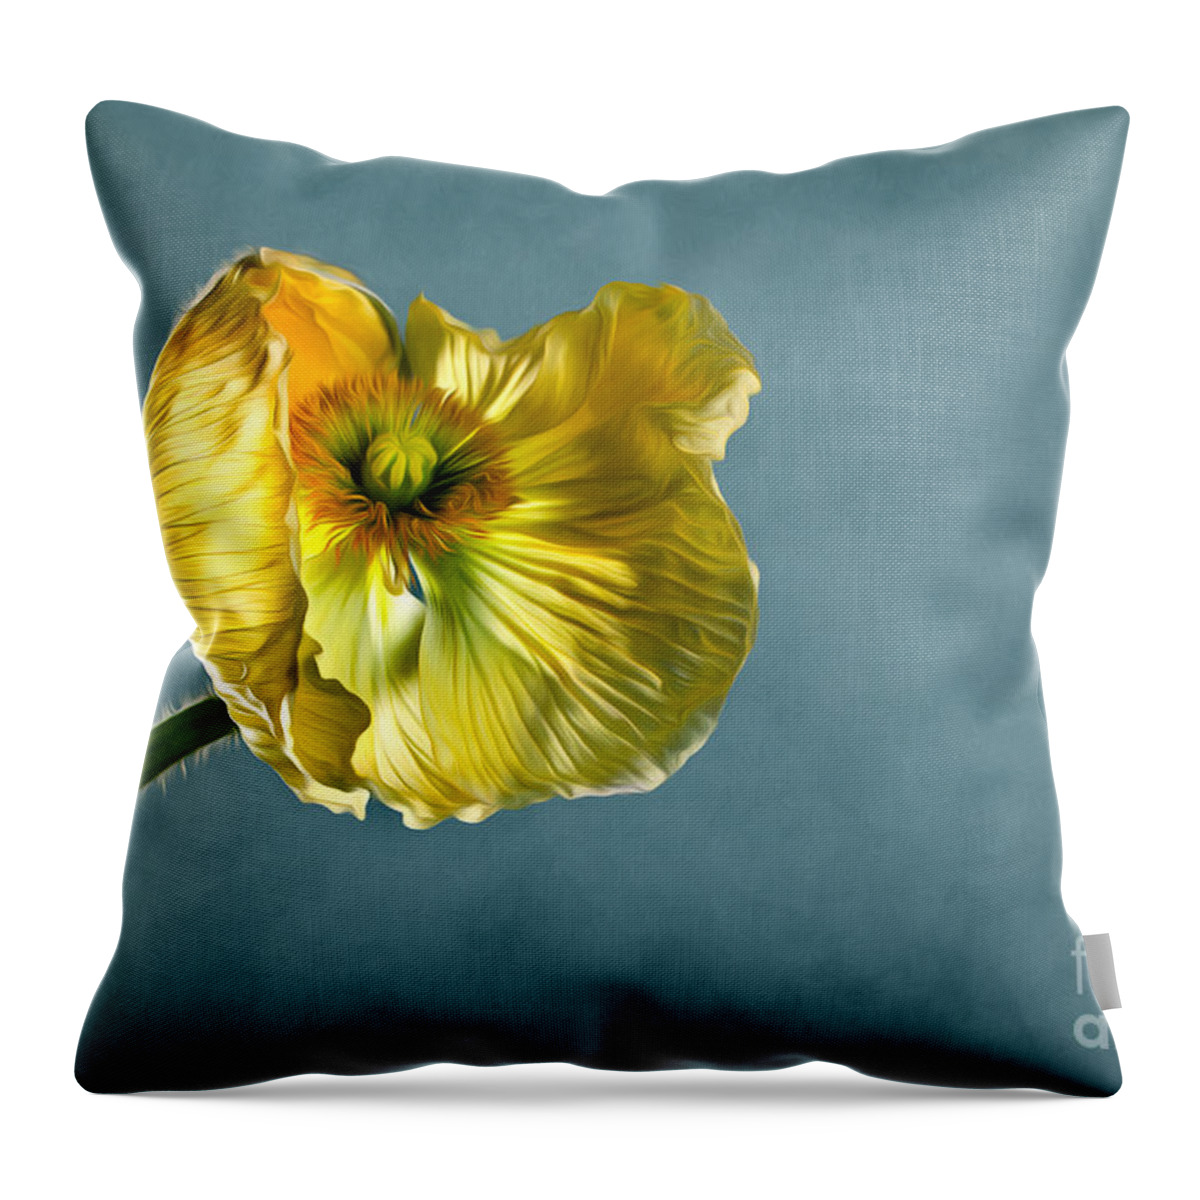 Poppy Throw Pillow featuring the photograph Yellow Poppy by Nailia Schwarz